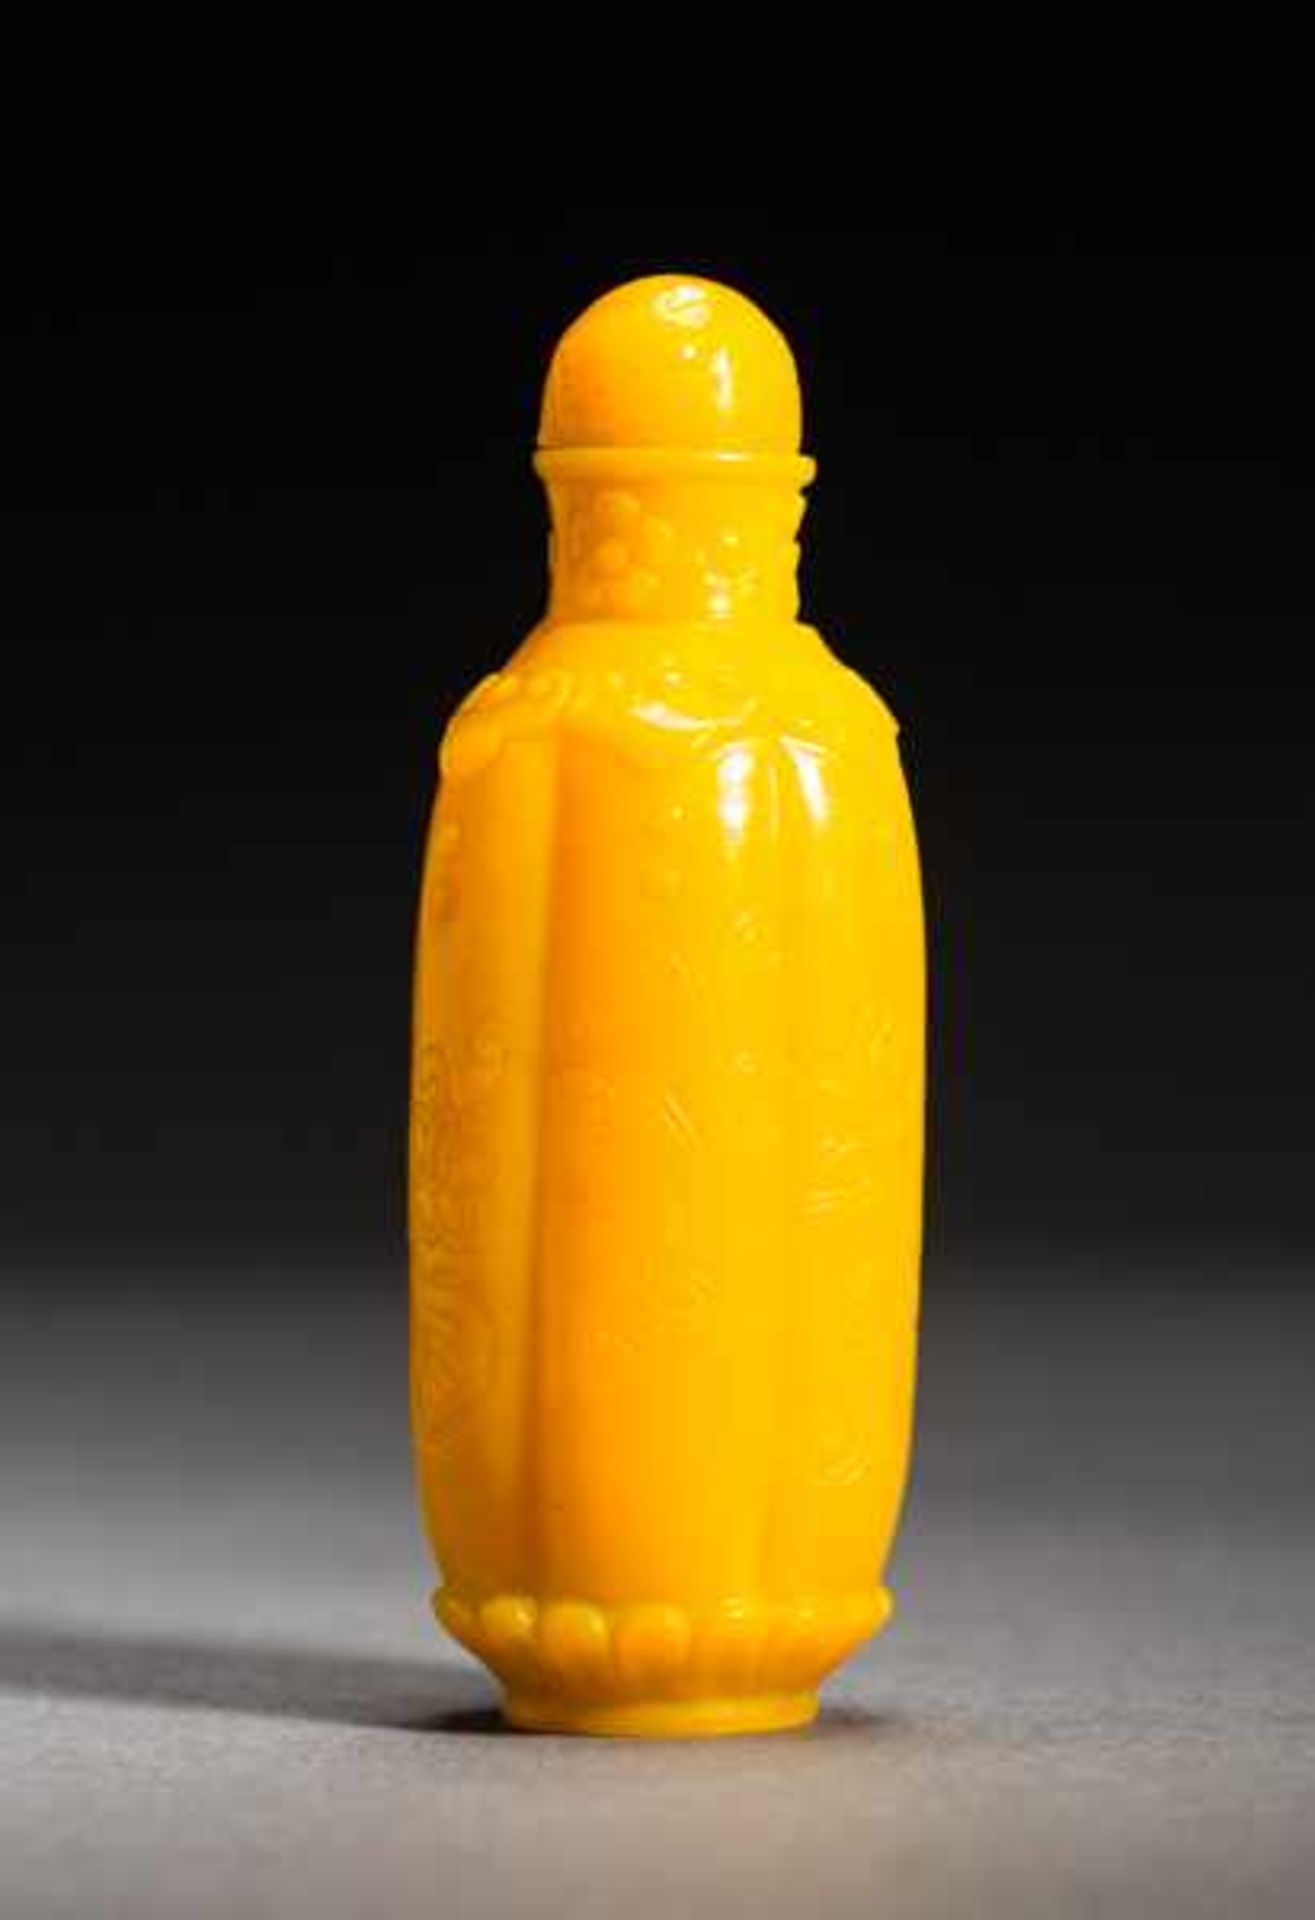 BLOSSOMS AND LONGEVITY RUYI Imperial yellow, Peking glass. Stopper: orange yellow glass; spoon